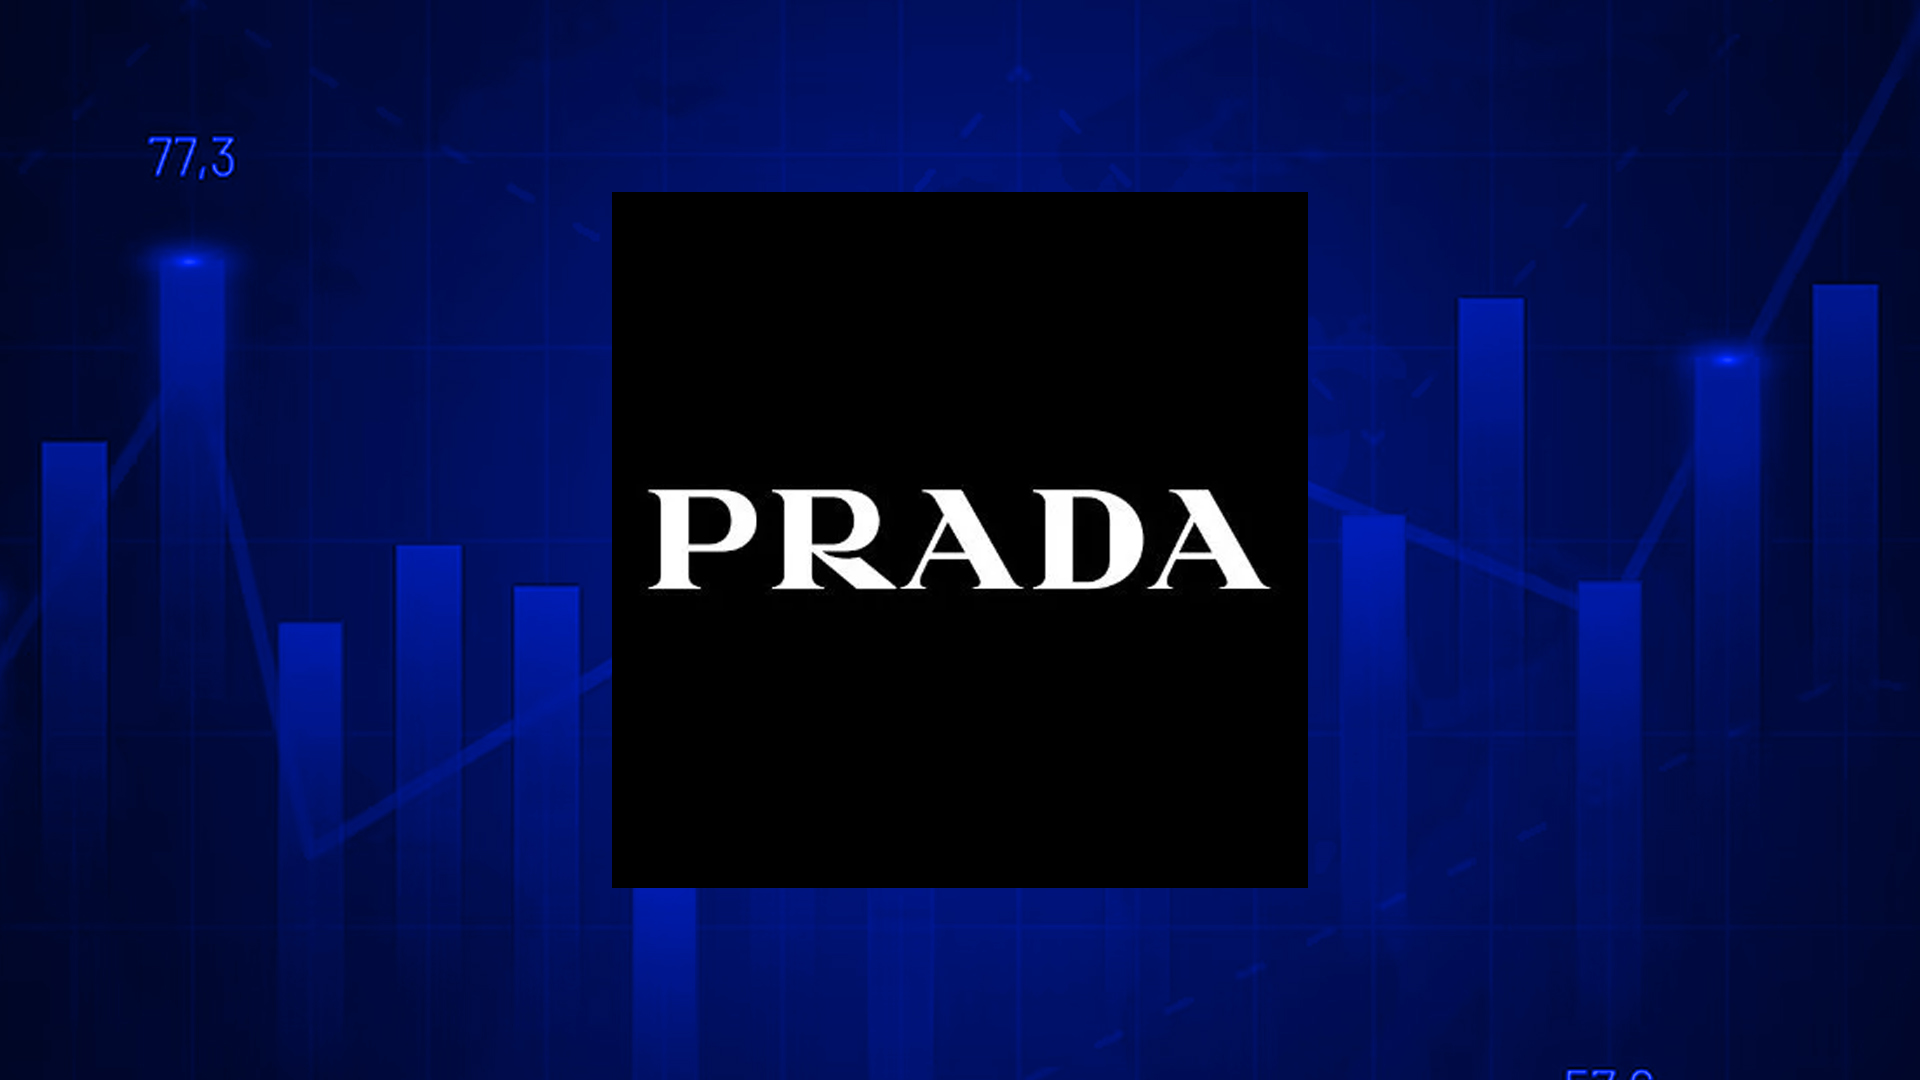 Prada Embraces Sustainable Fashion: Is the idea overpromising?